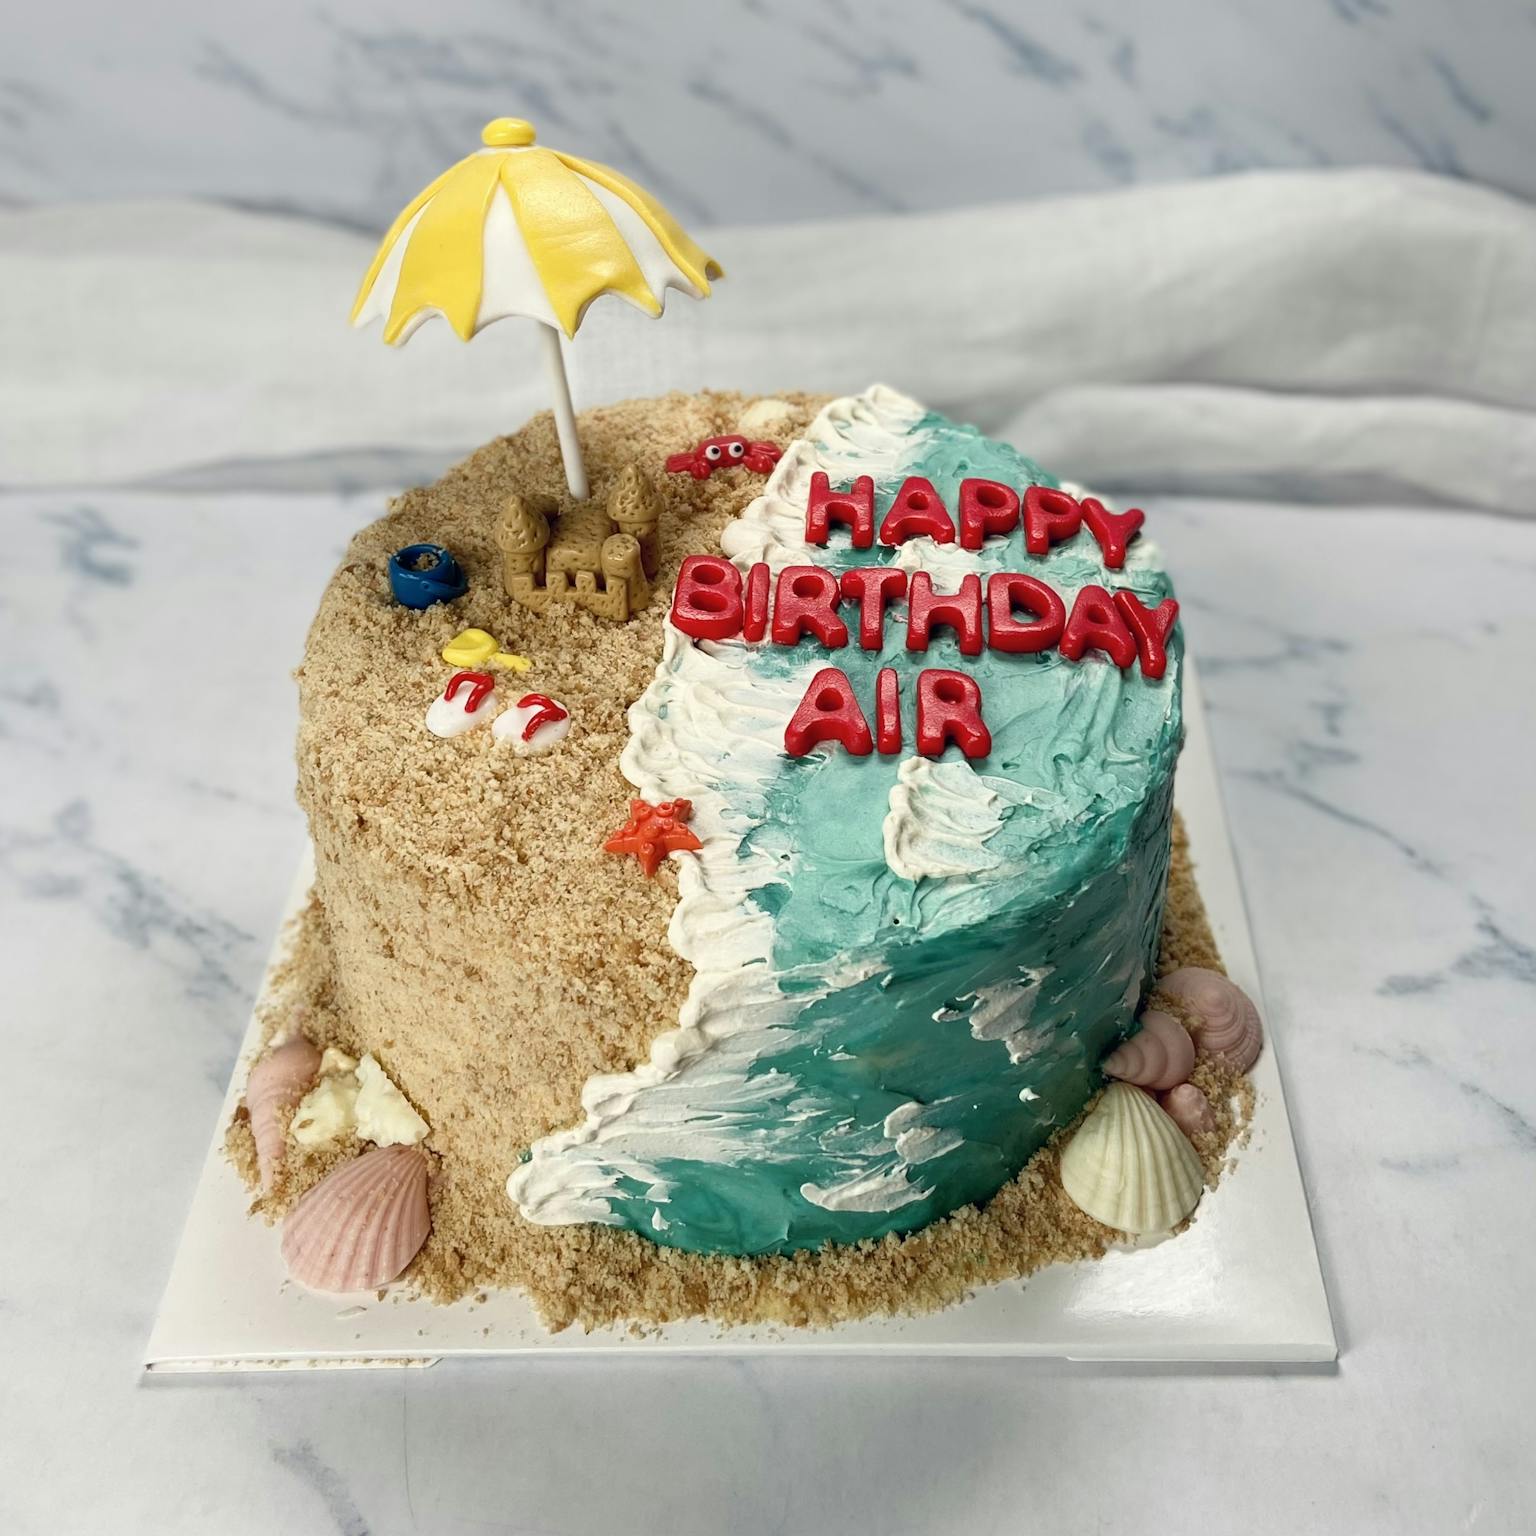 100% edible fondant sculpted beach themed cake